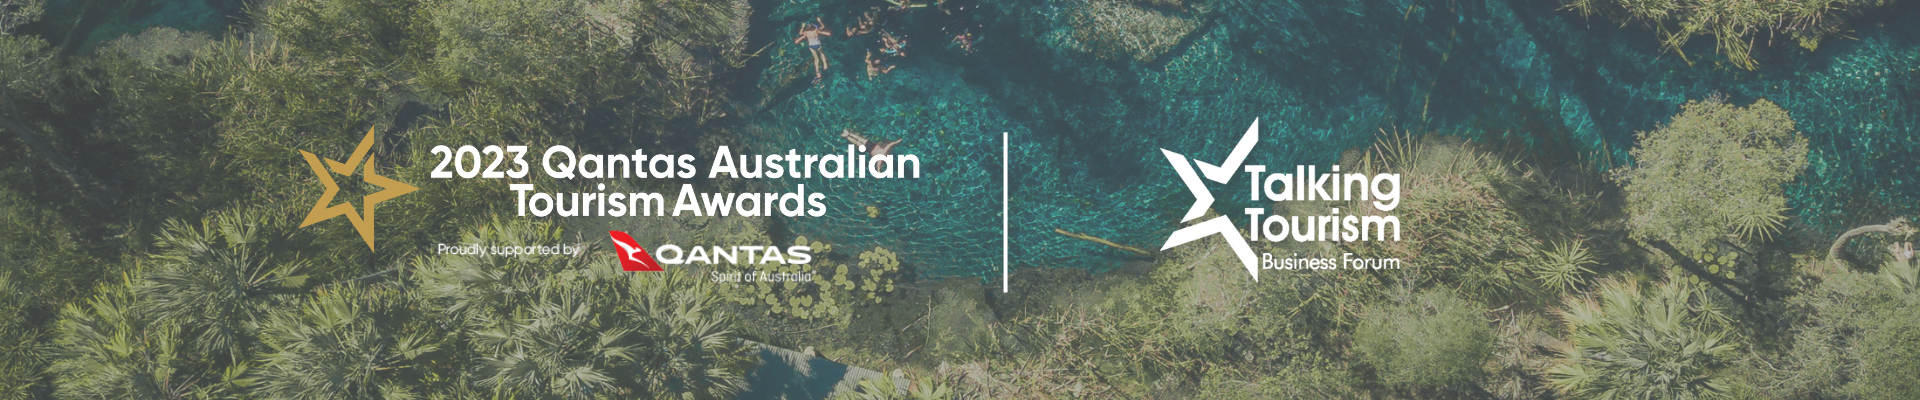 2023 Qantas Australian Tourism Awards website